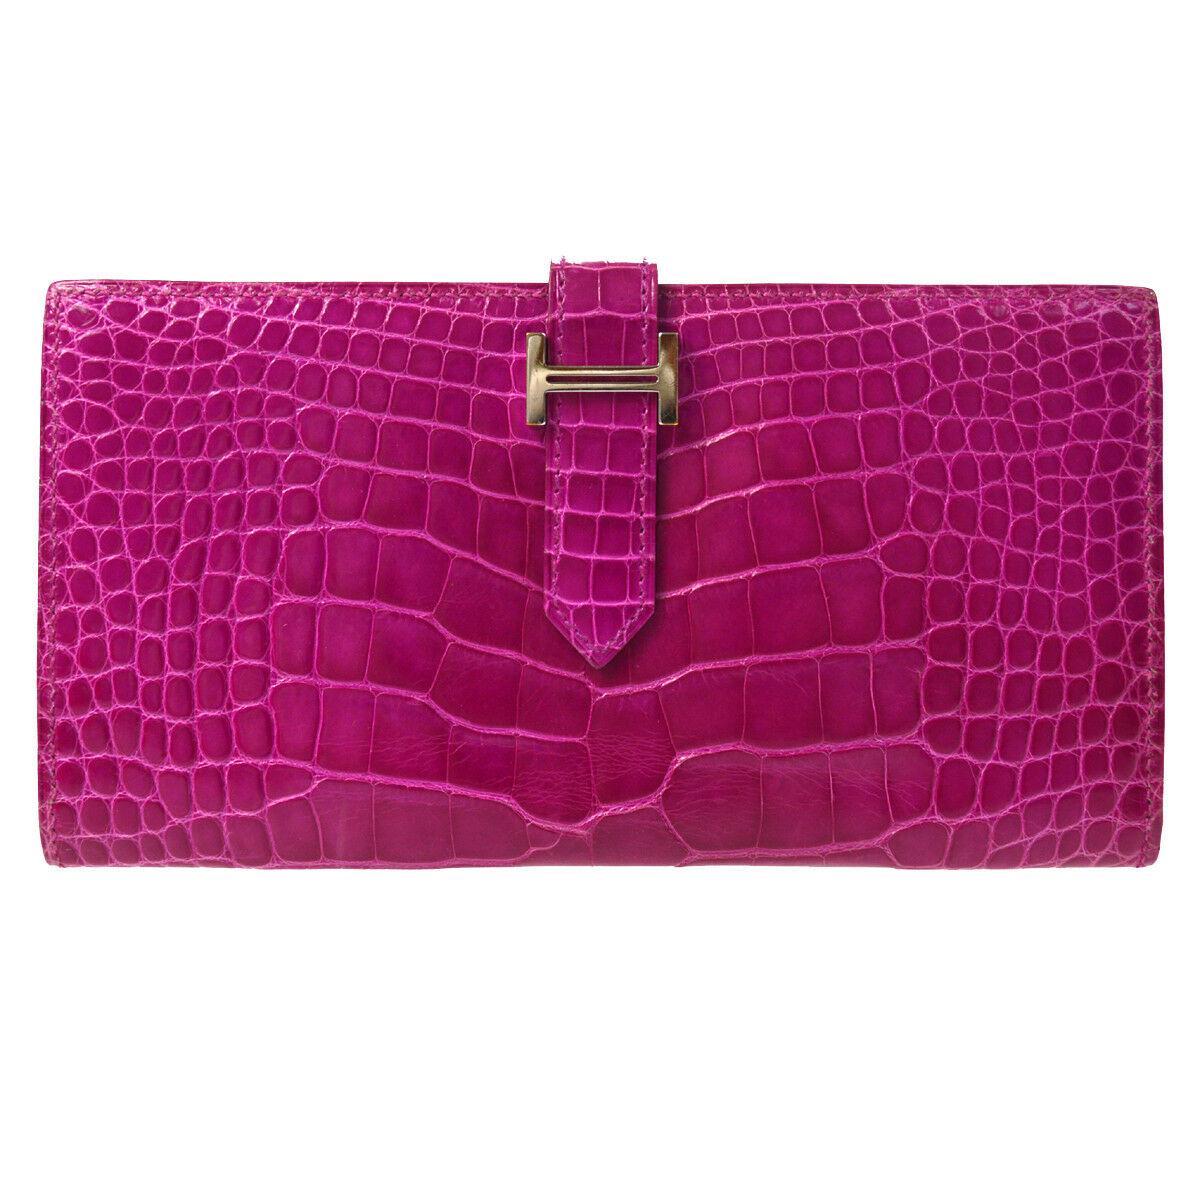 Hermes Hot Pink Crocodile Palladium Evening Clutch Wallet Bag in Box